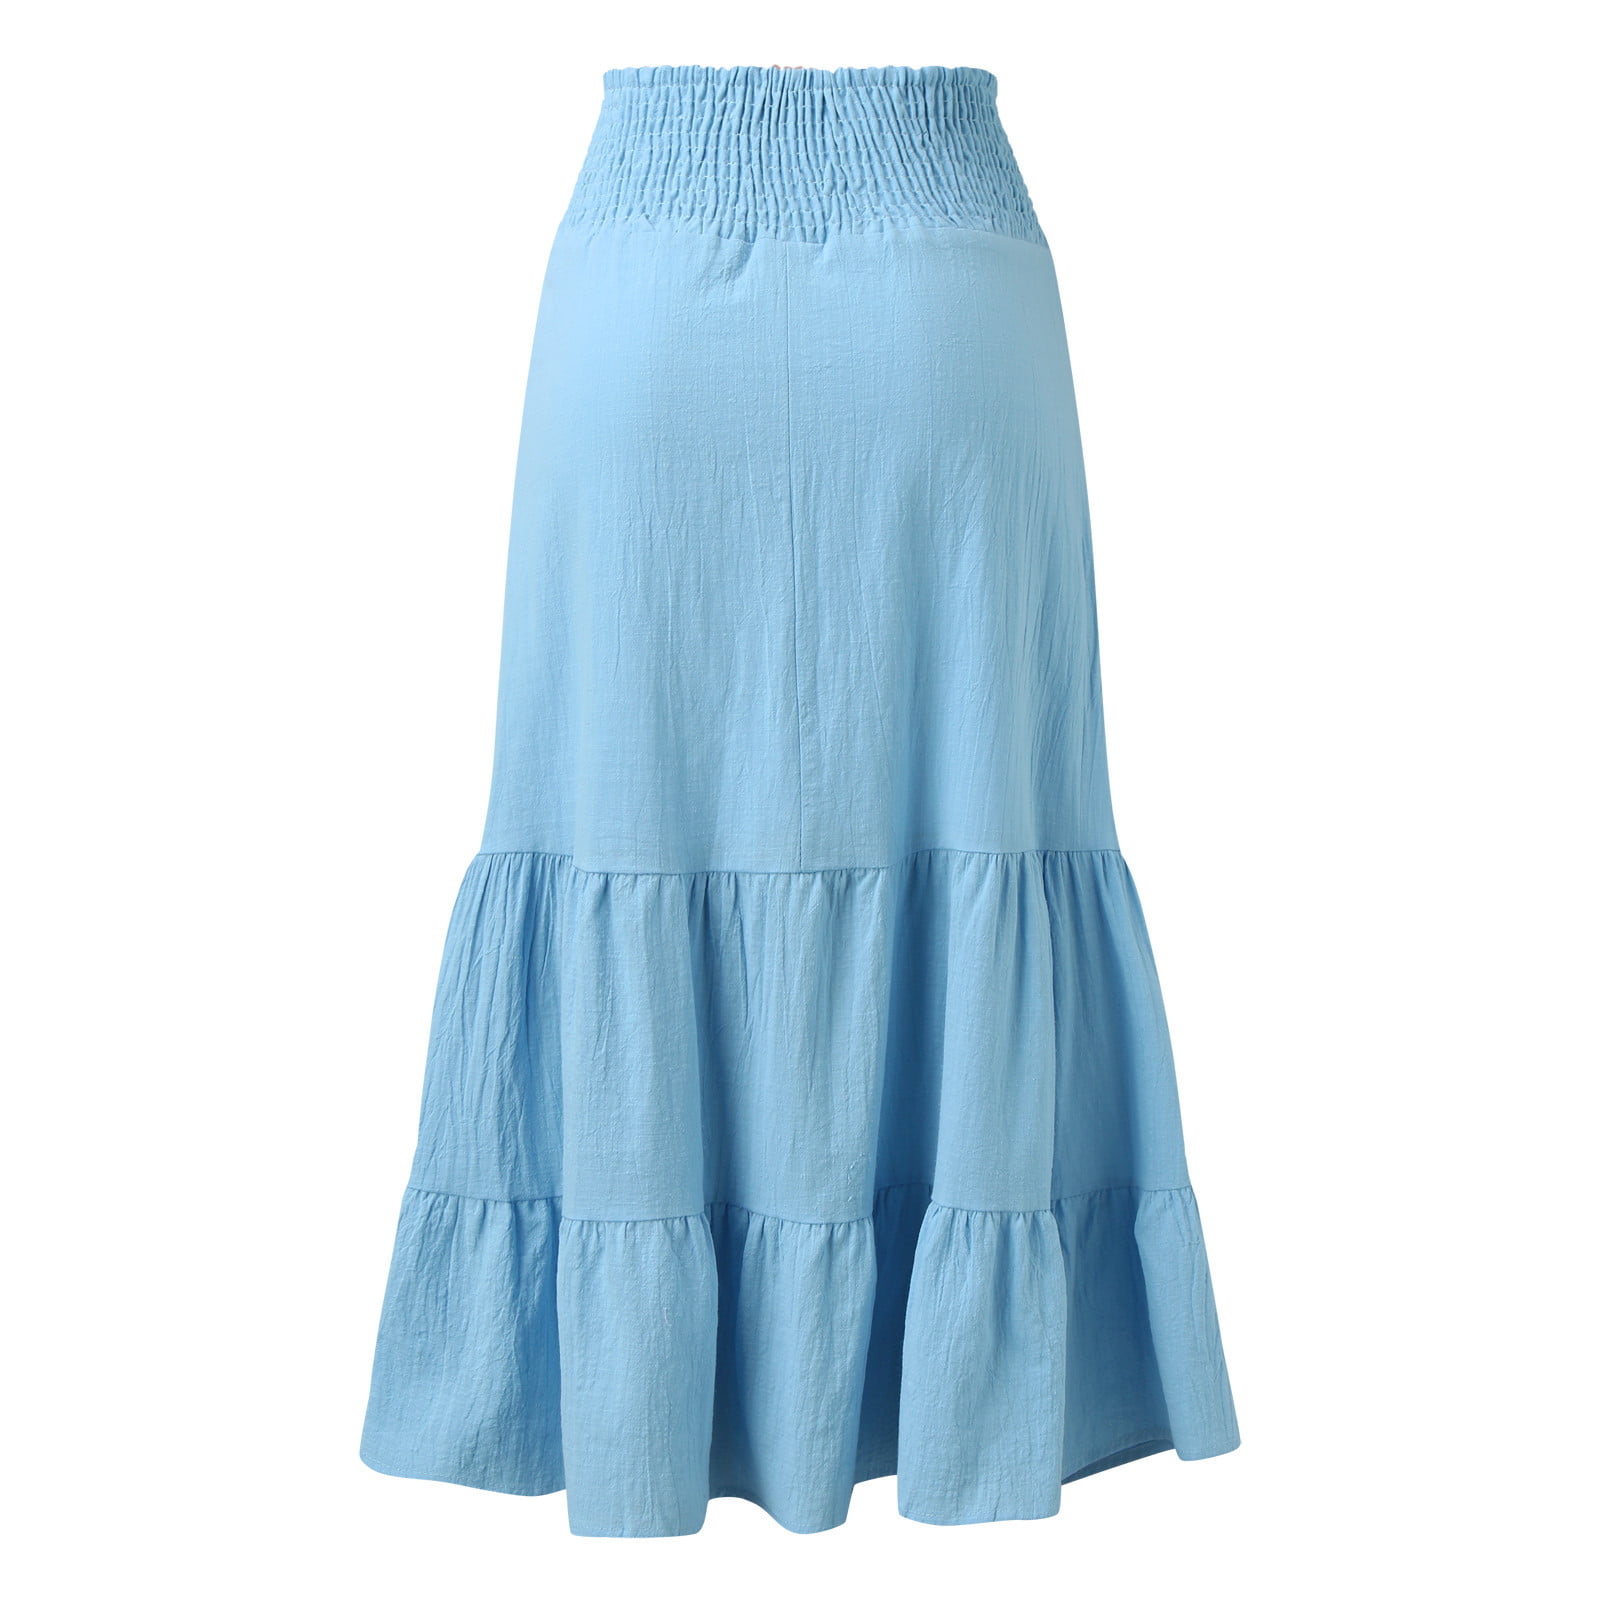 Jdefeg Skirt Patterns for Sewing Women Women's Summer Elastic Waist Maxi Skirts Boho A Line Flowy Long Skirts with Pockets Plus Size Pencil Skirt